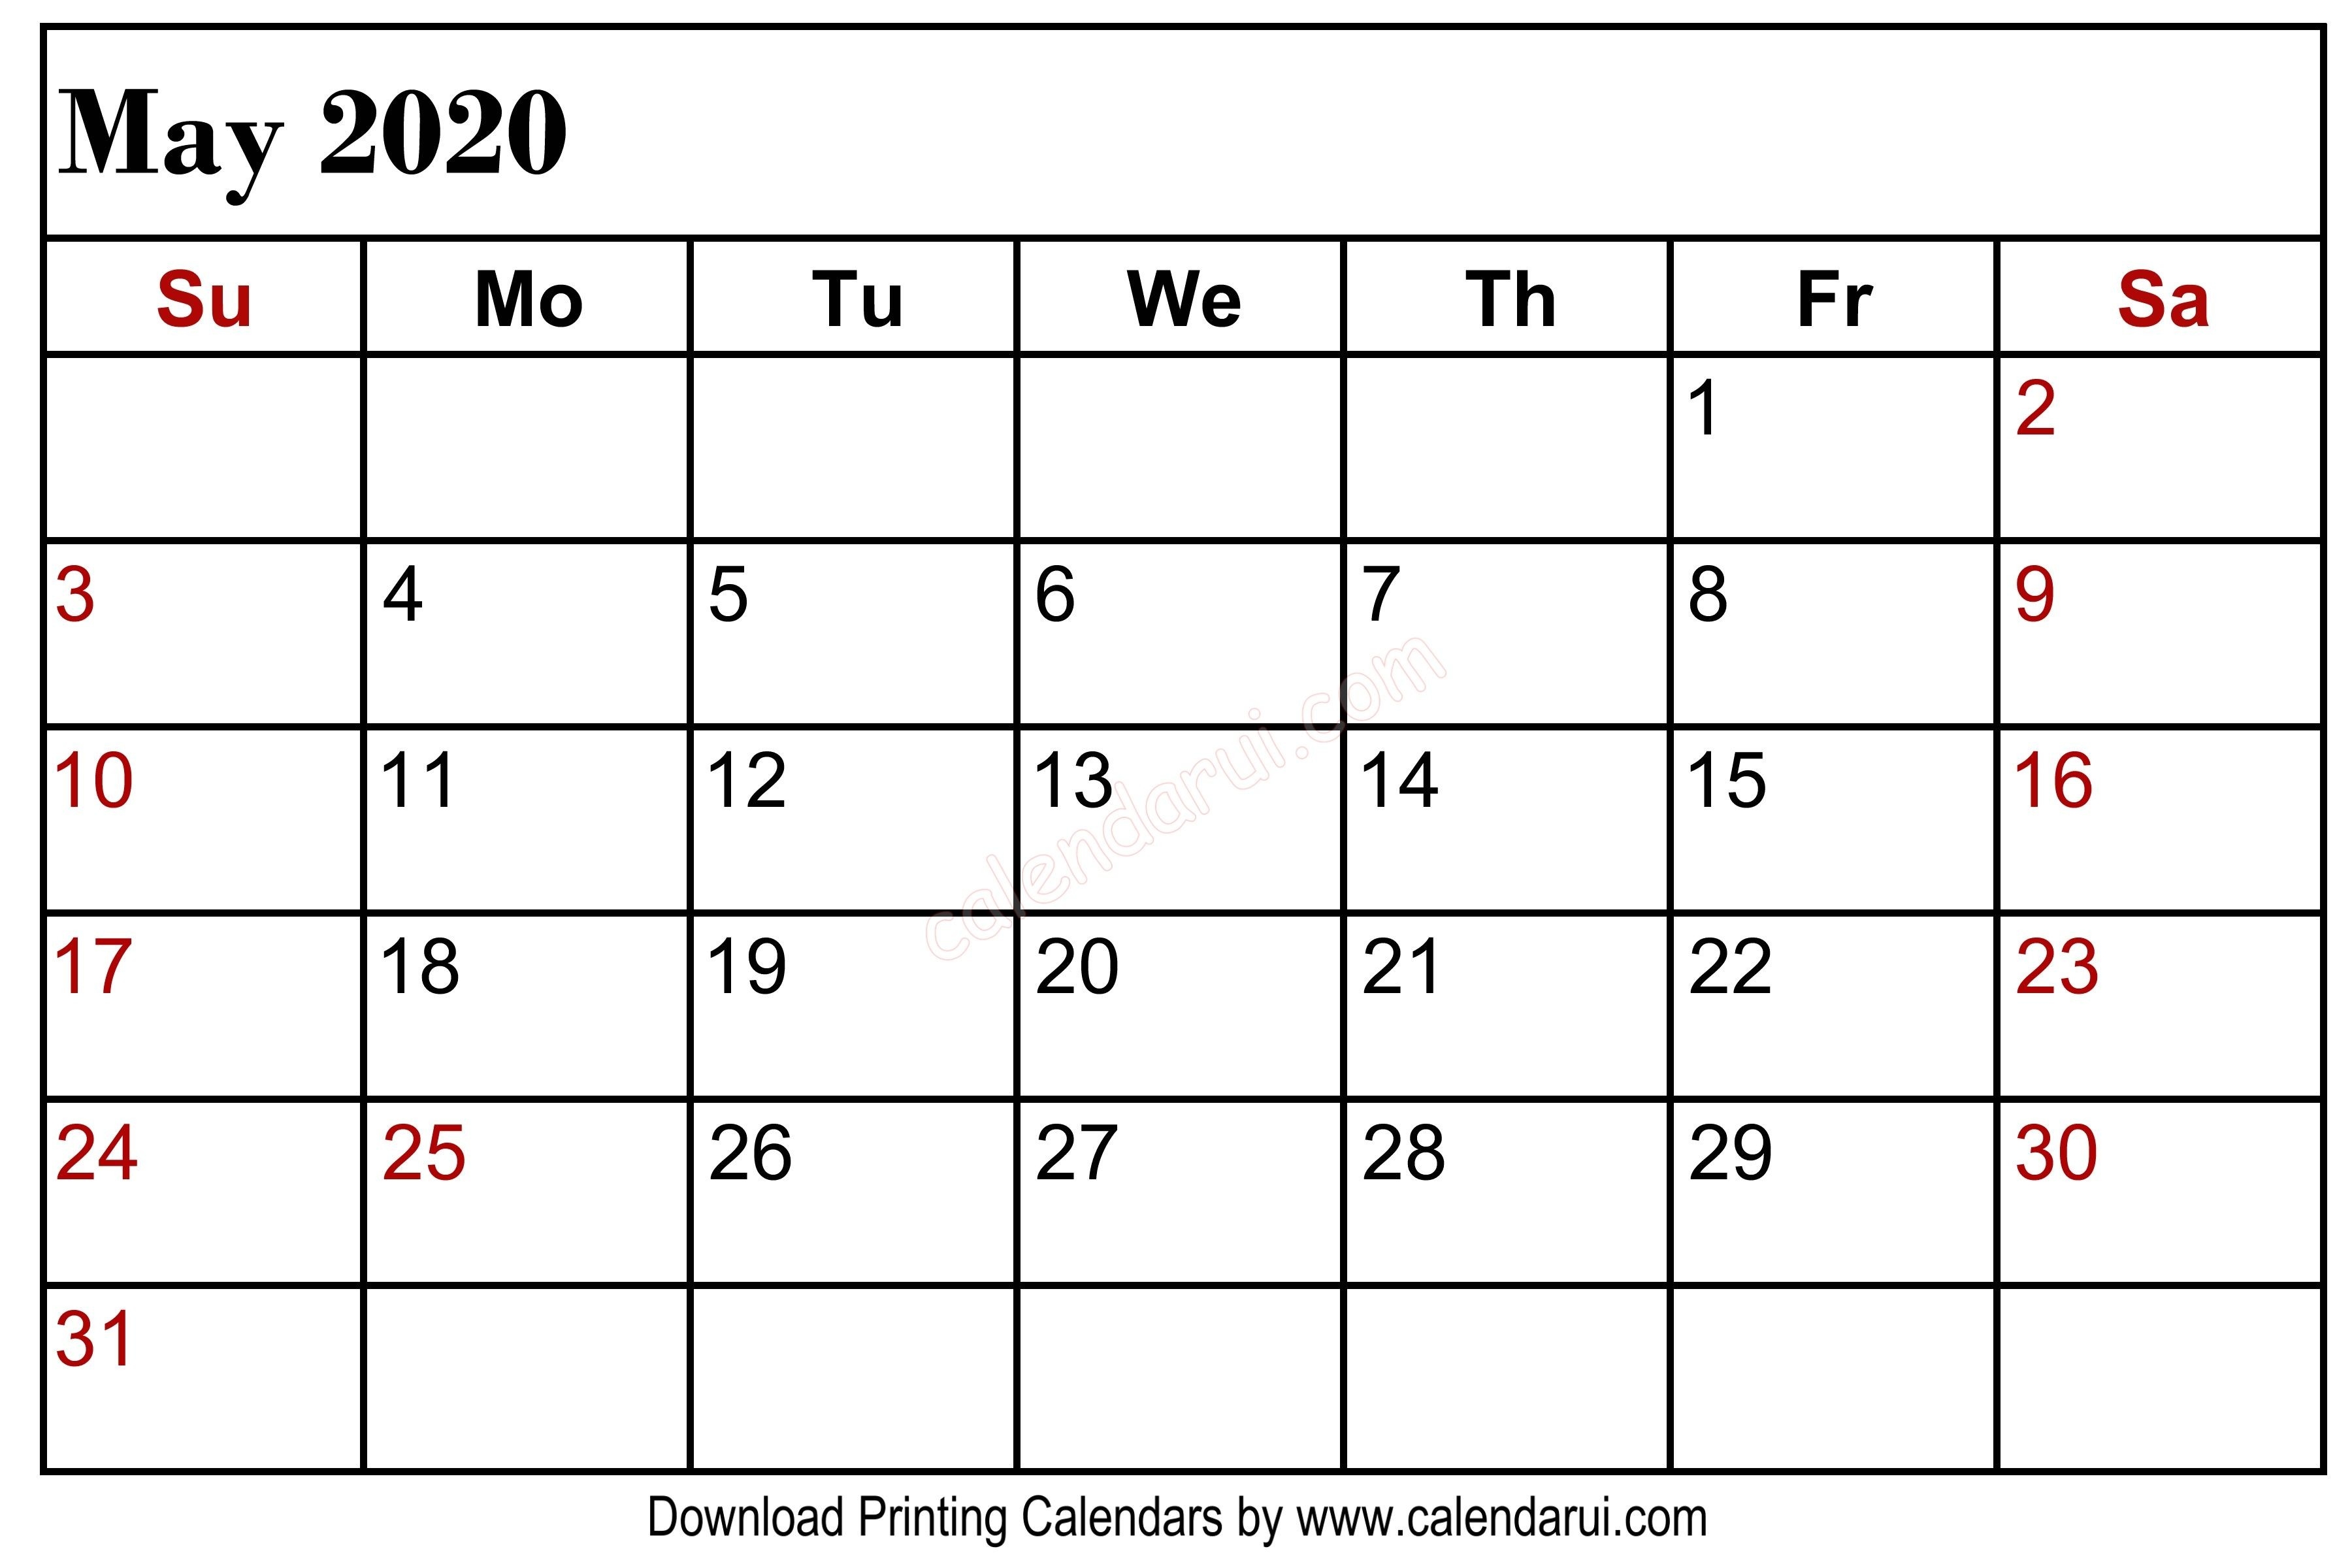 May 2020 Blank Calendar Printable Free Download Left Header-2020 May All Holidays